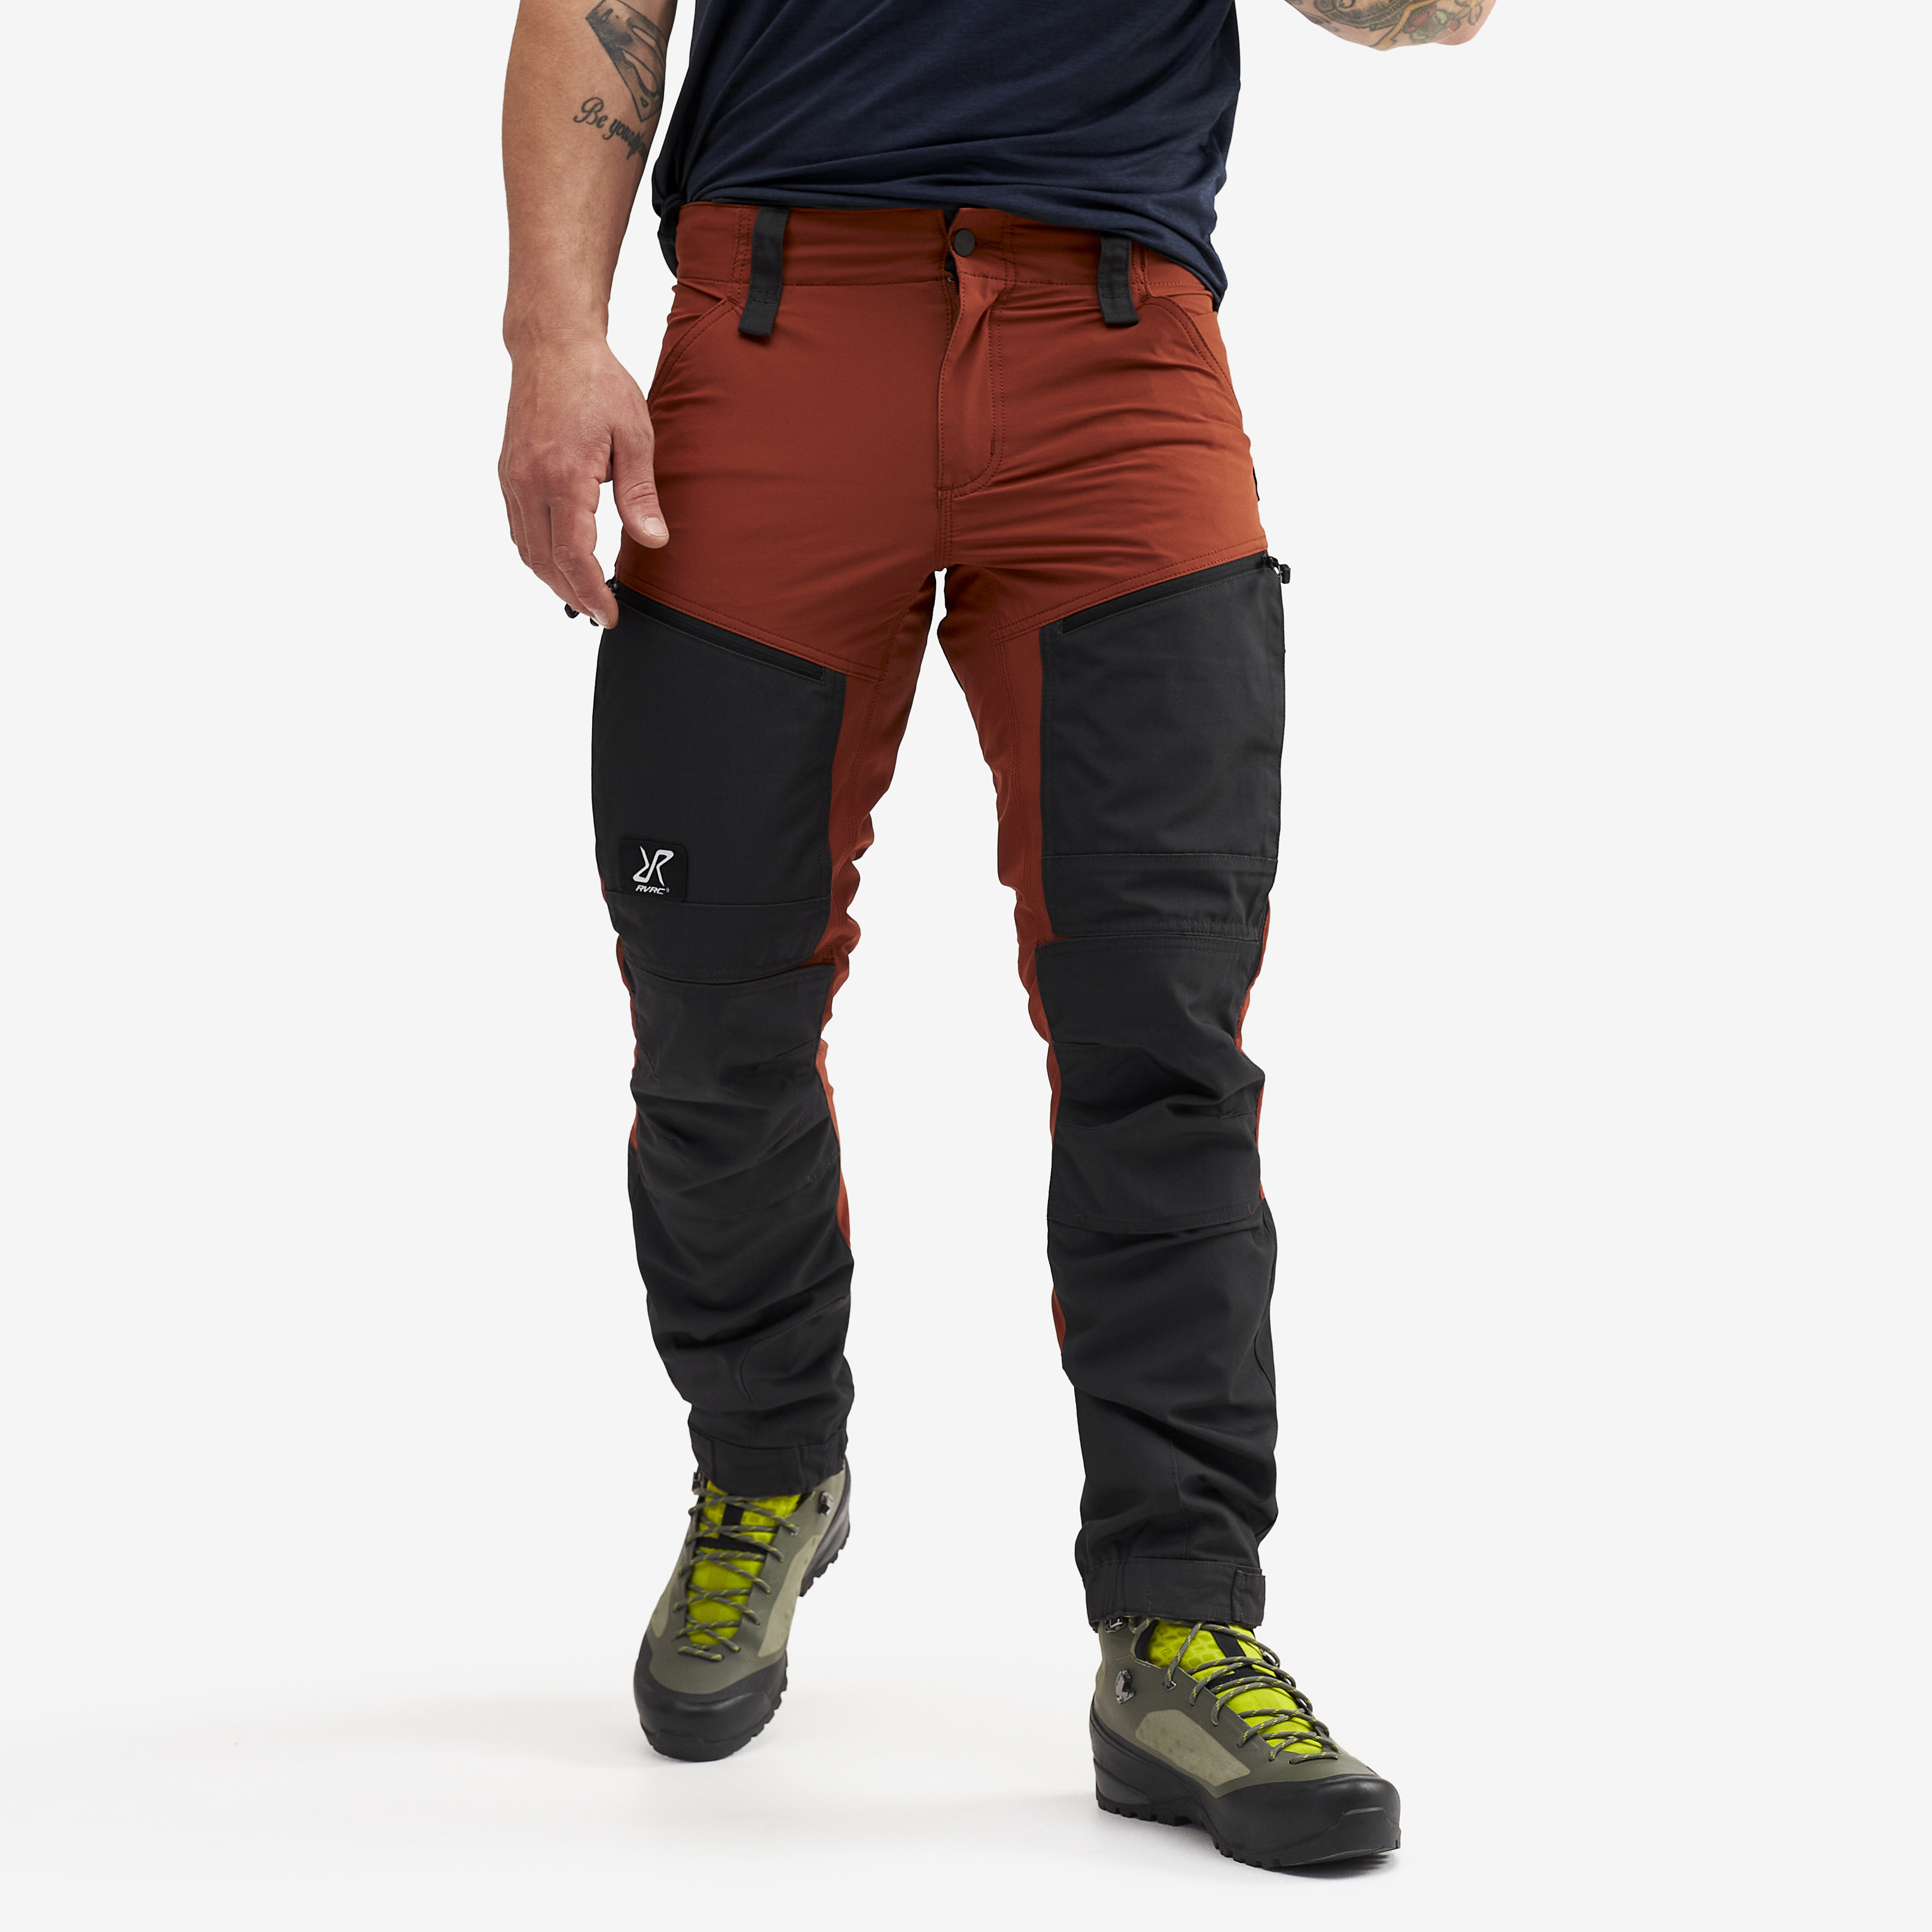 RVRC GP Pro Short hiking trousers for men in orange